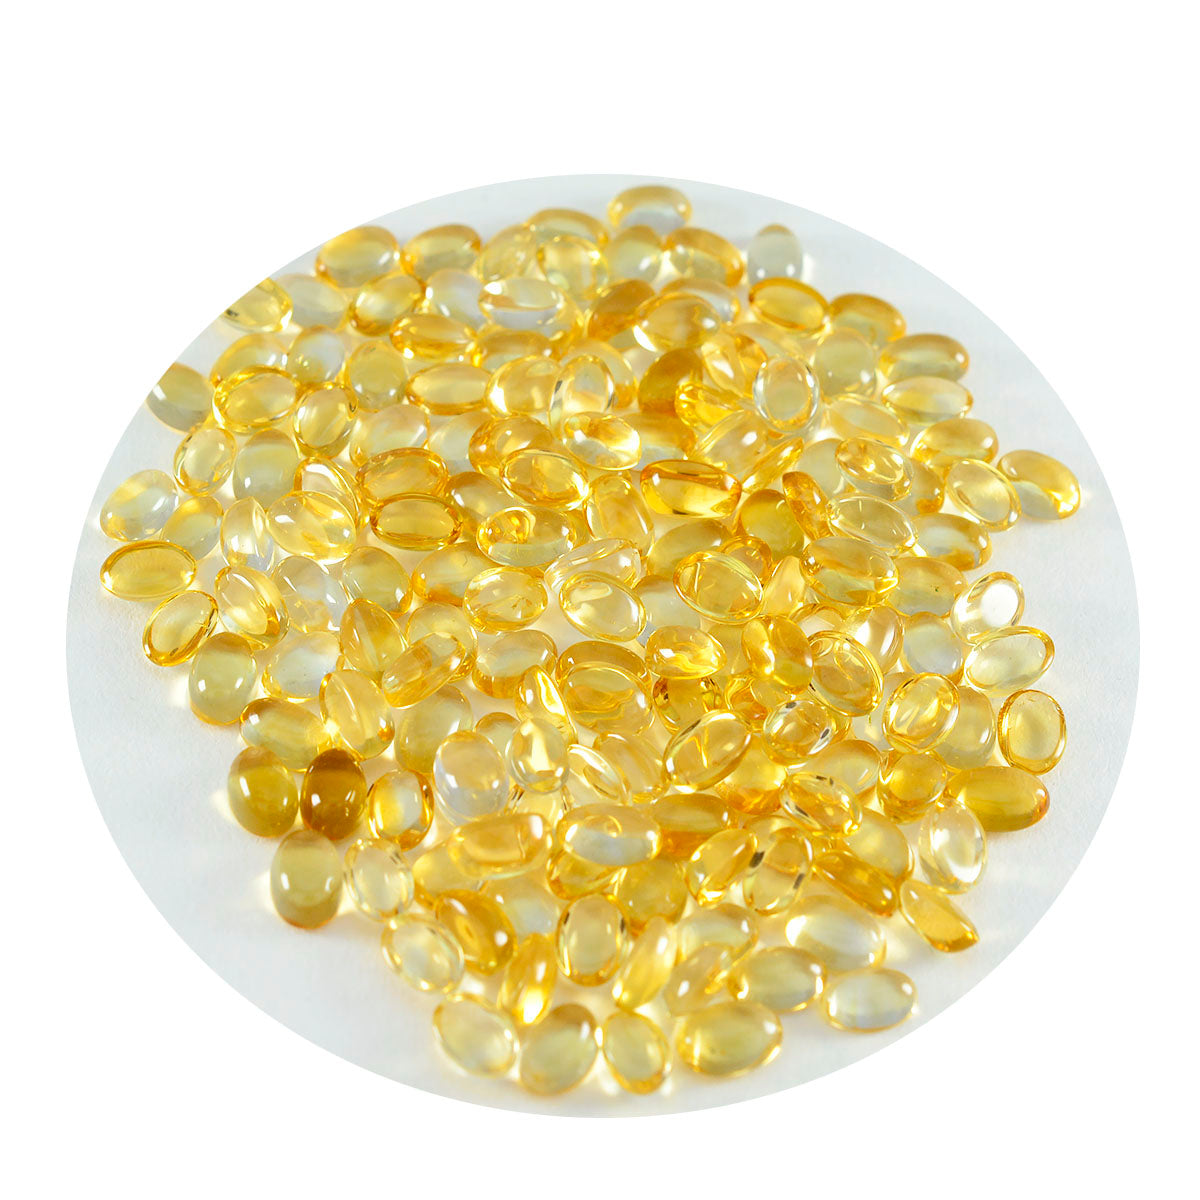 Riyogems 1PC gele citrien cabochon 3x5 mm ovale vorm mooie kwaliteit losse edelstenen